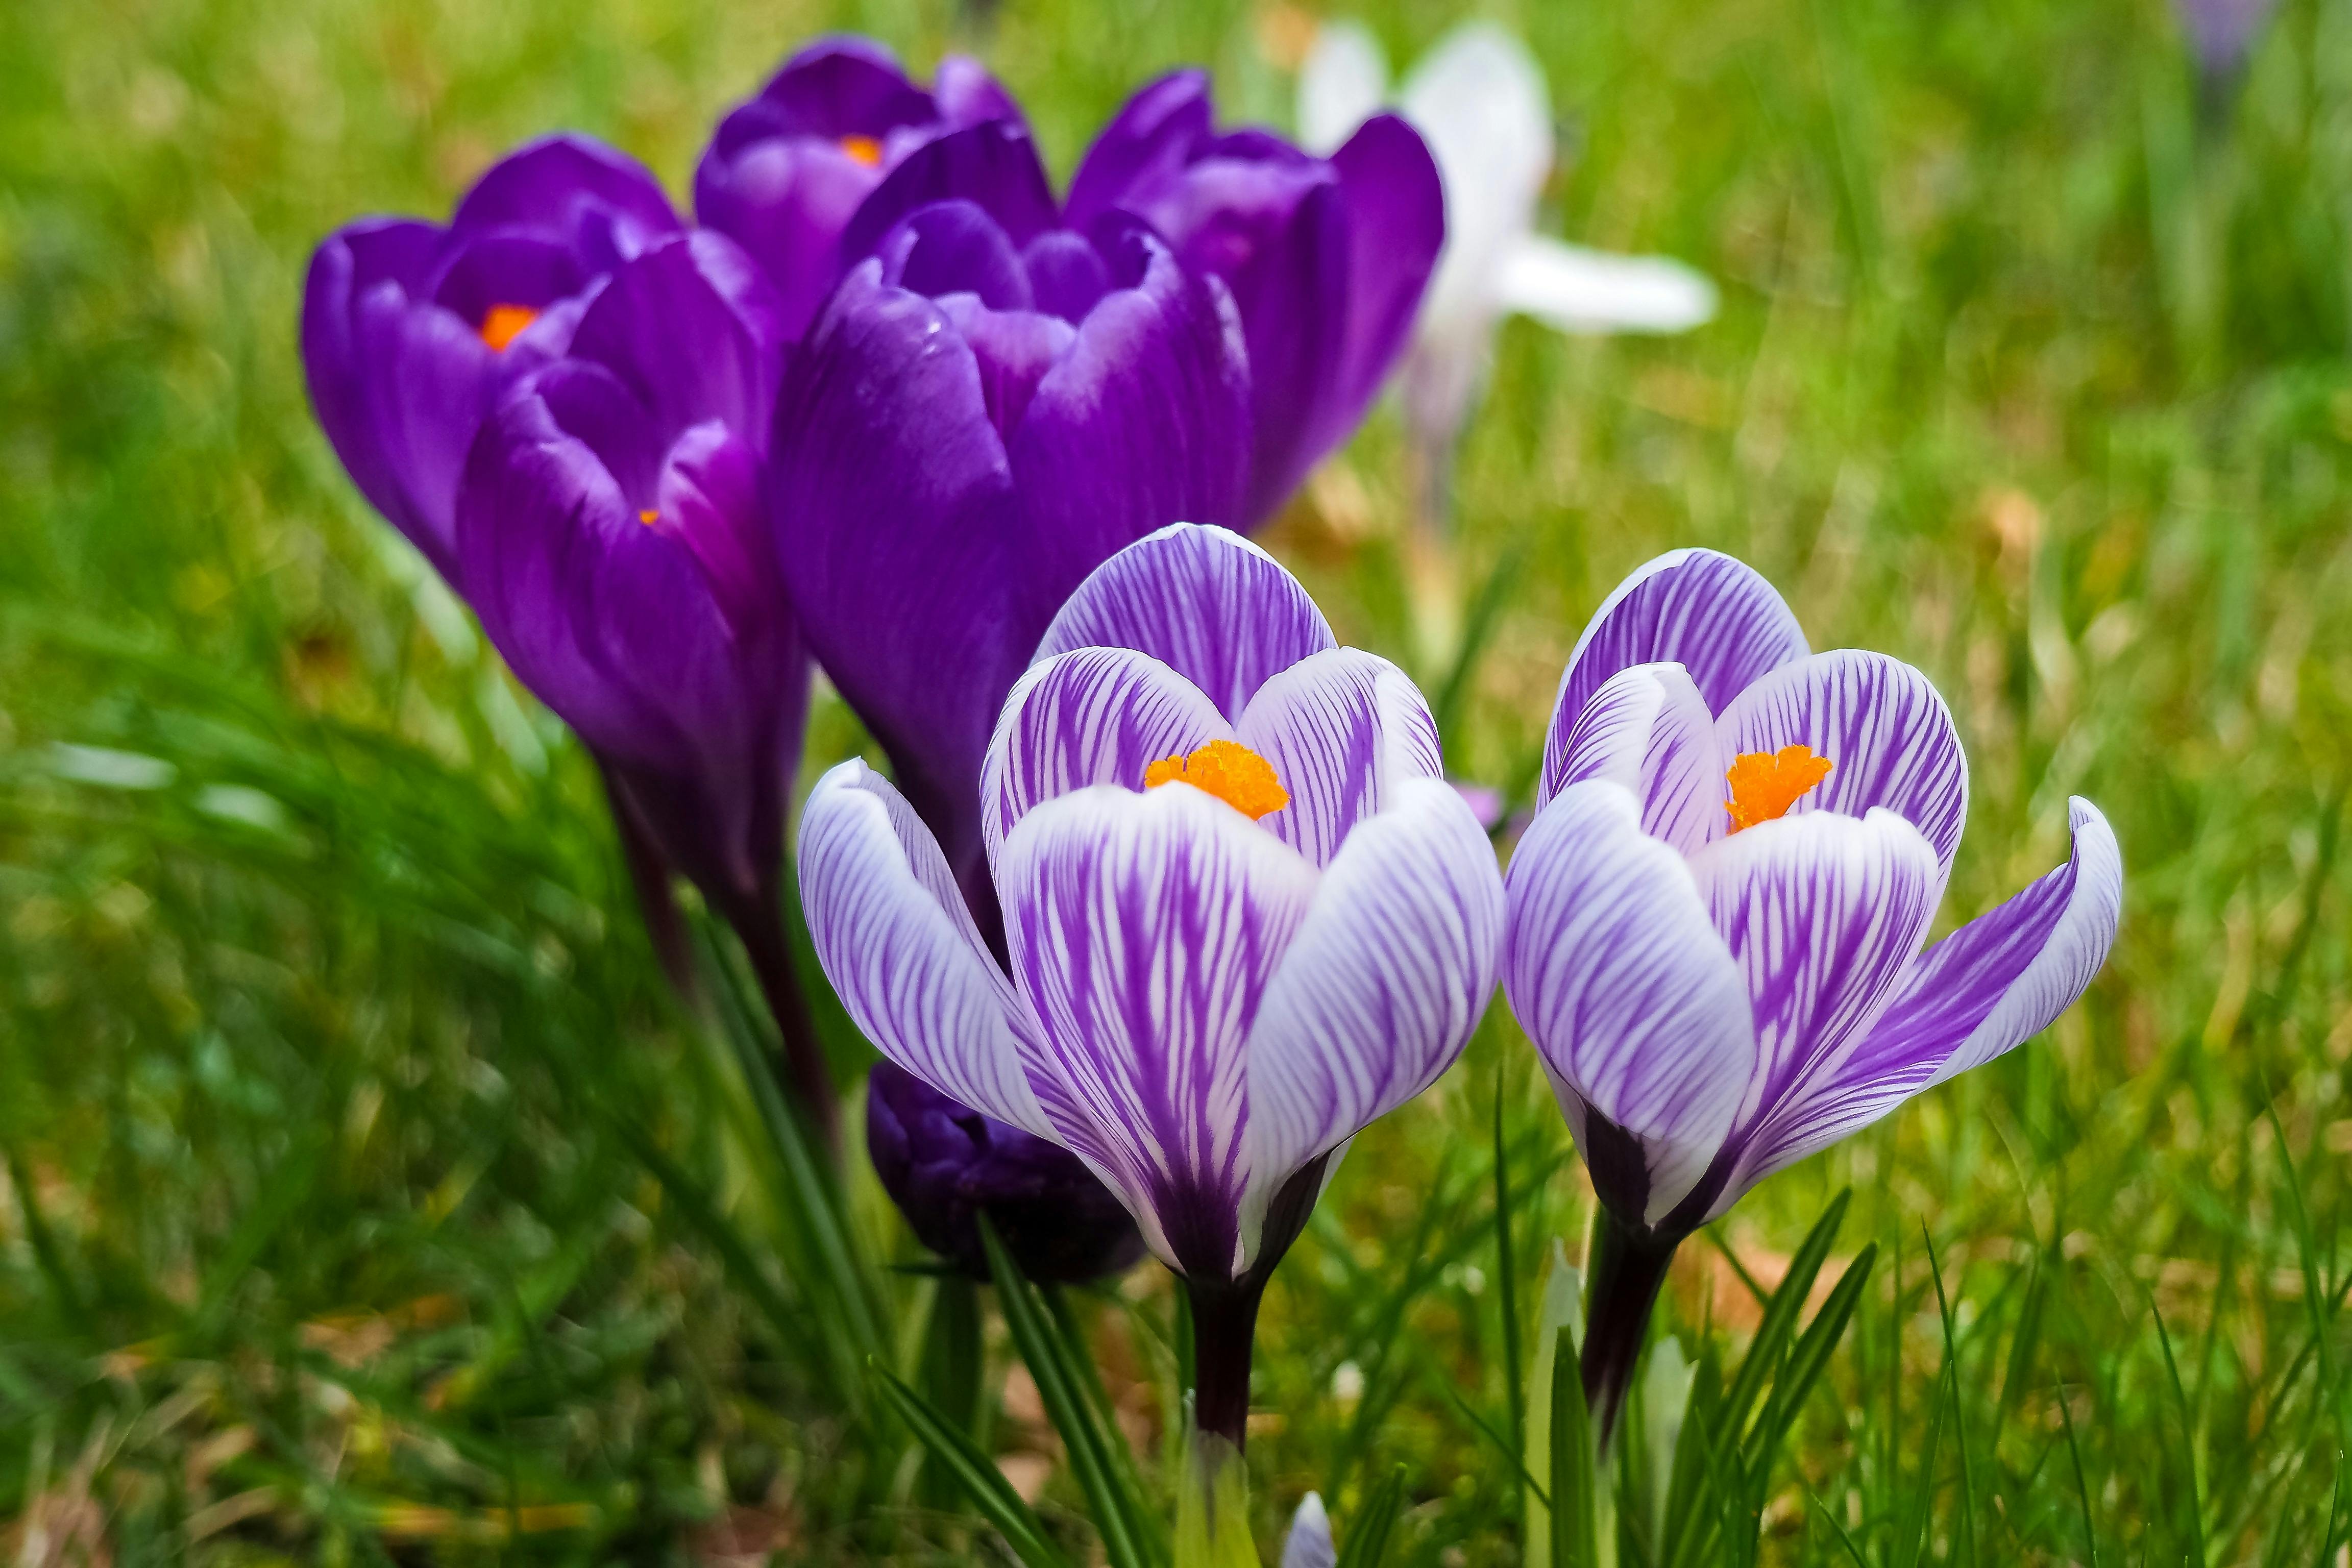 1000+ Beautiful Spring Flowers Photos · Pexels · Free Stock Photos